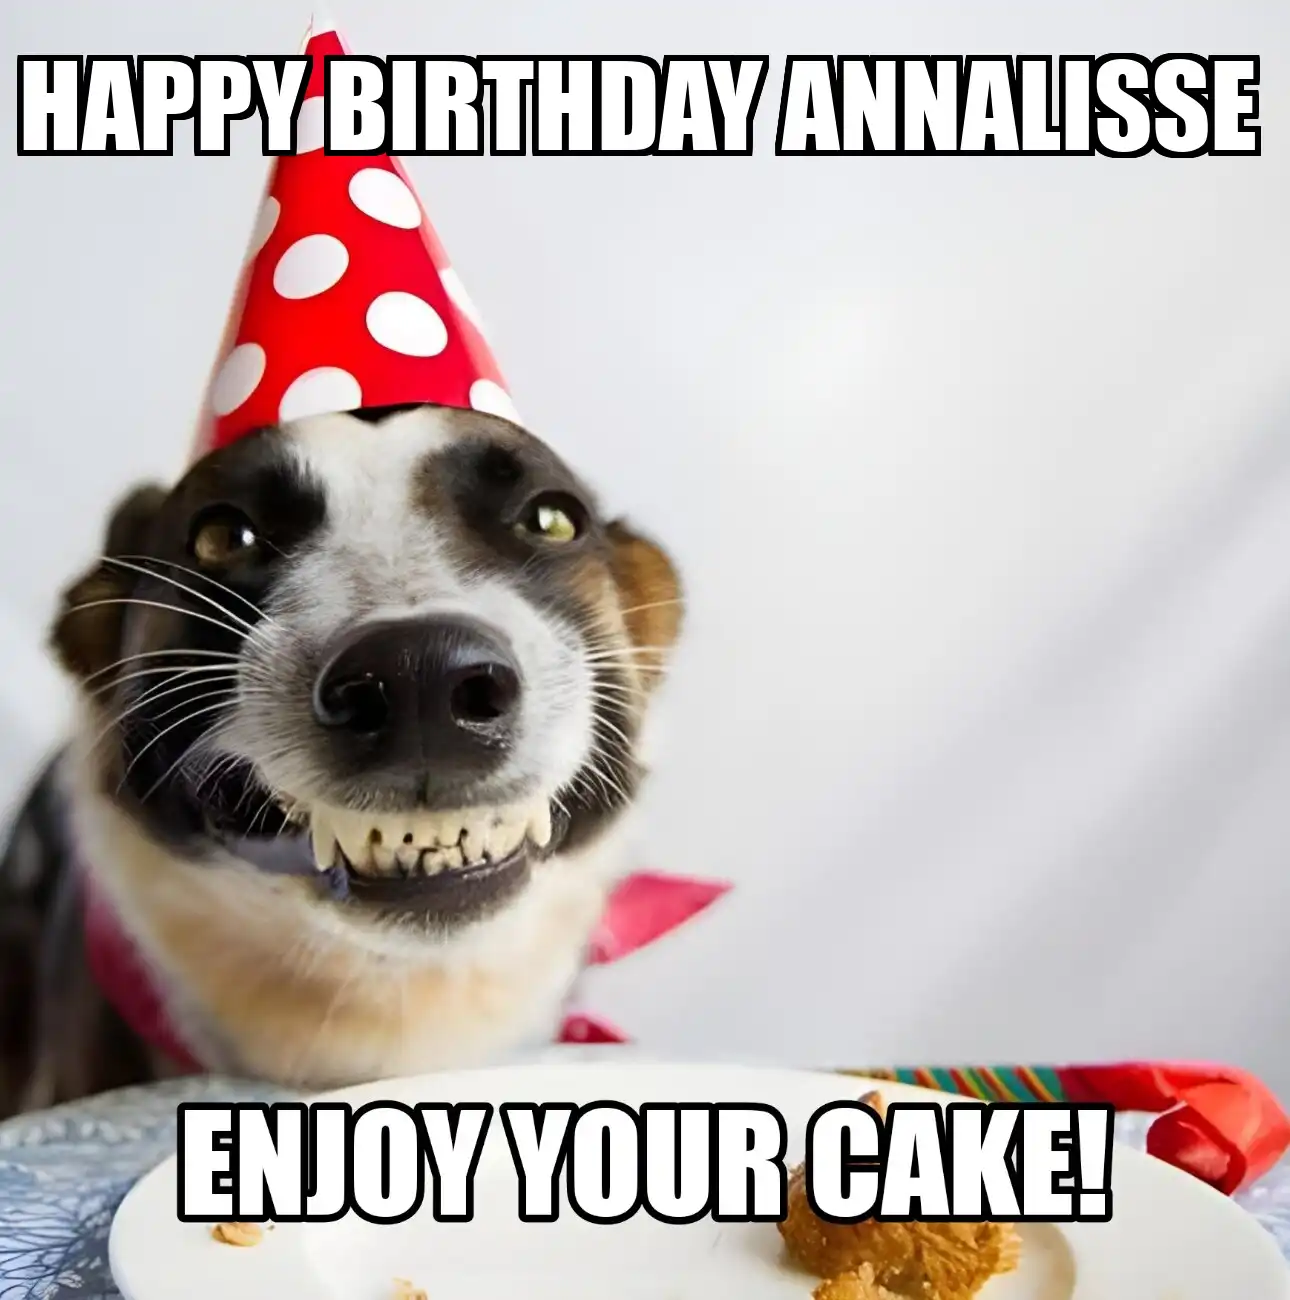 Happy Birthday Annalisse Enjoy Your Cake Dog Meme